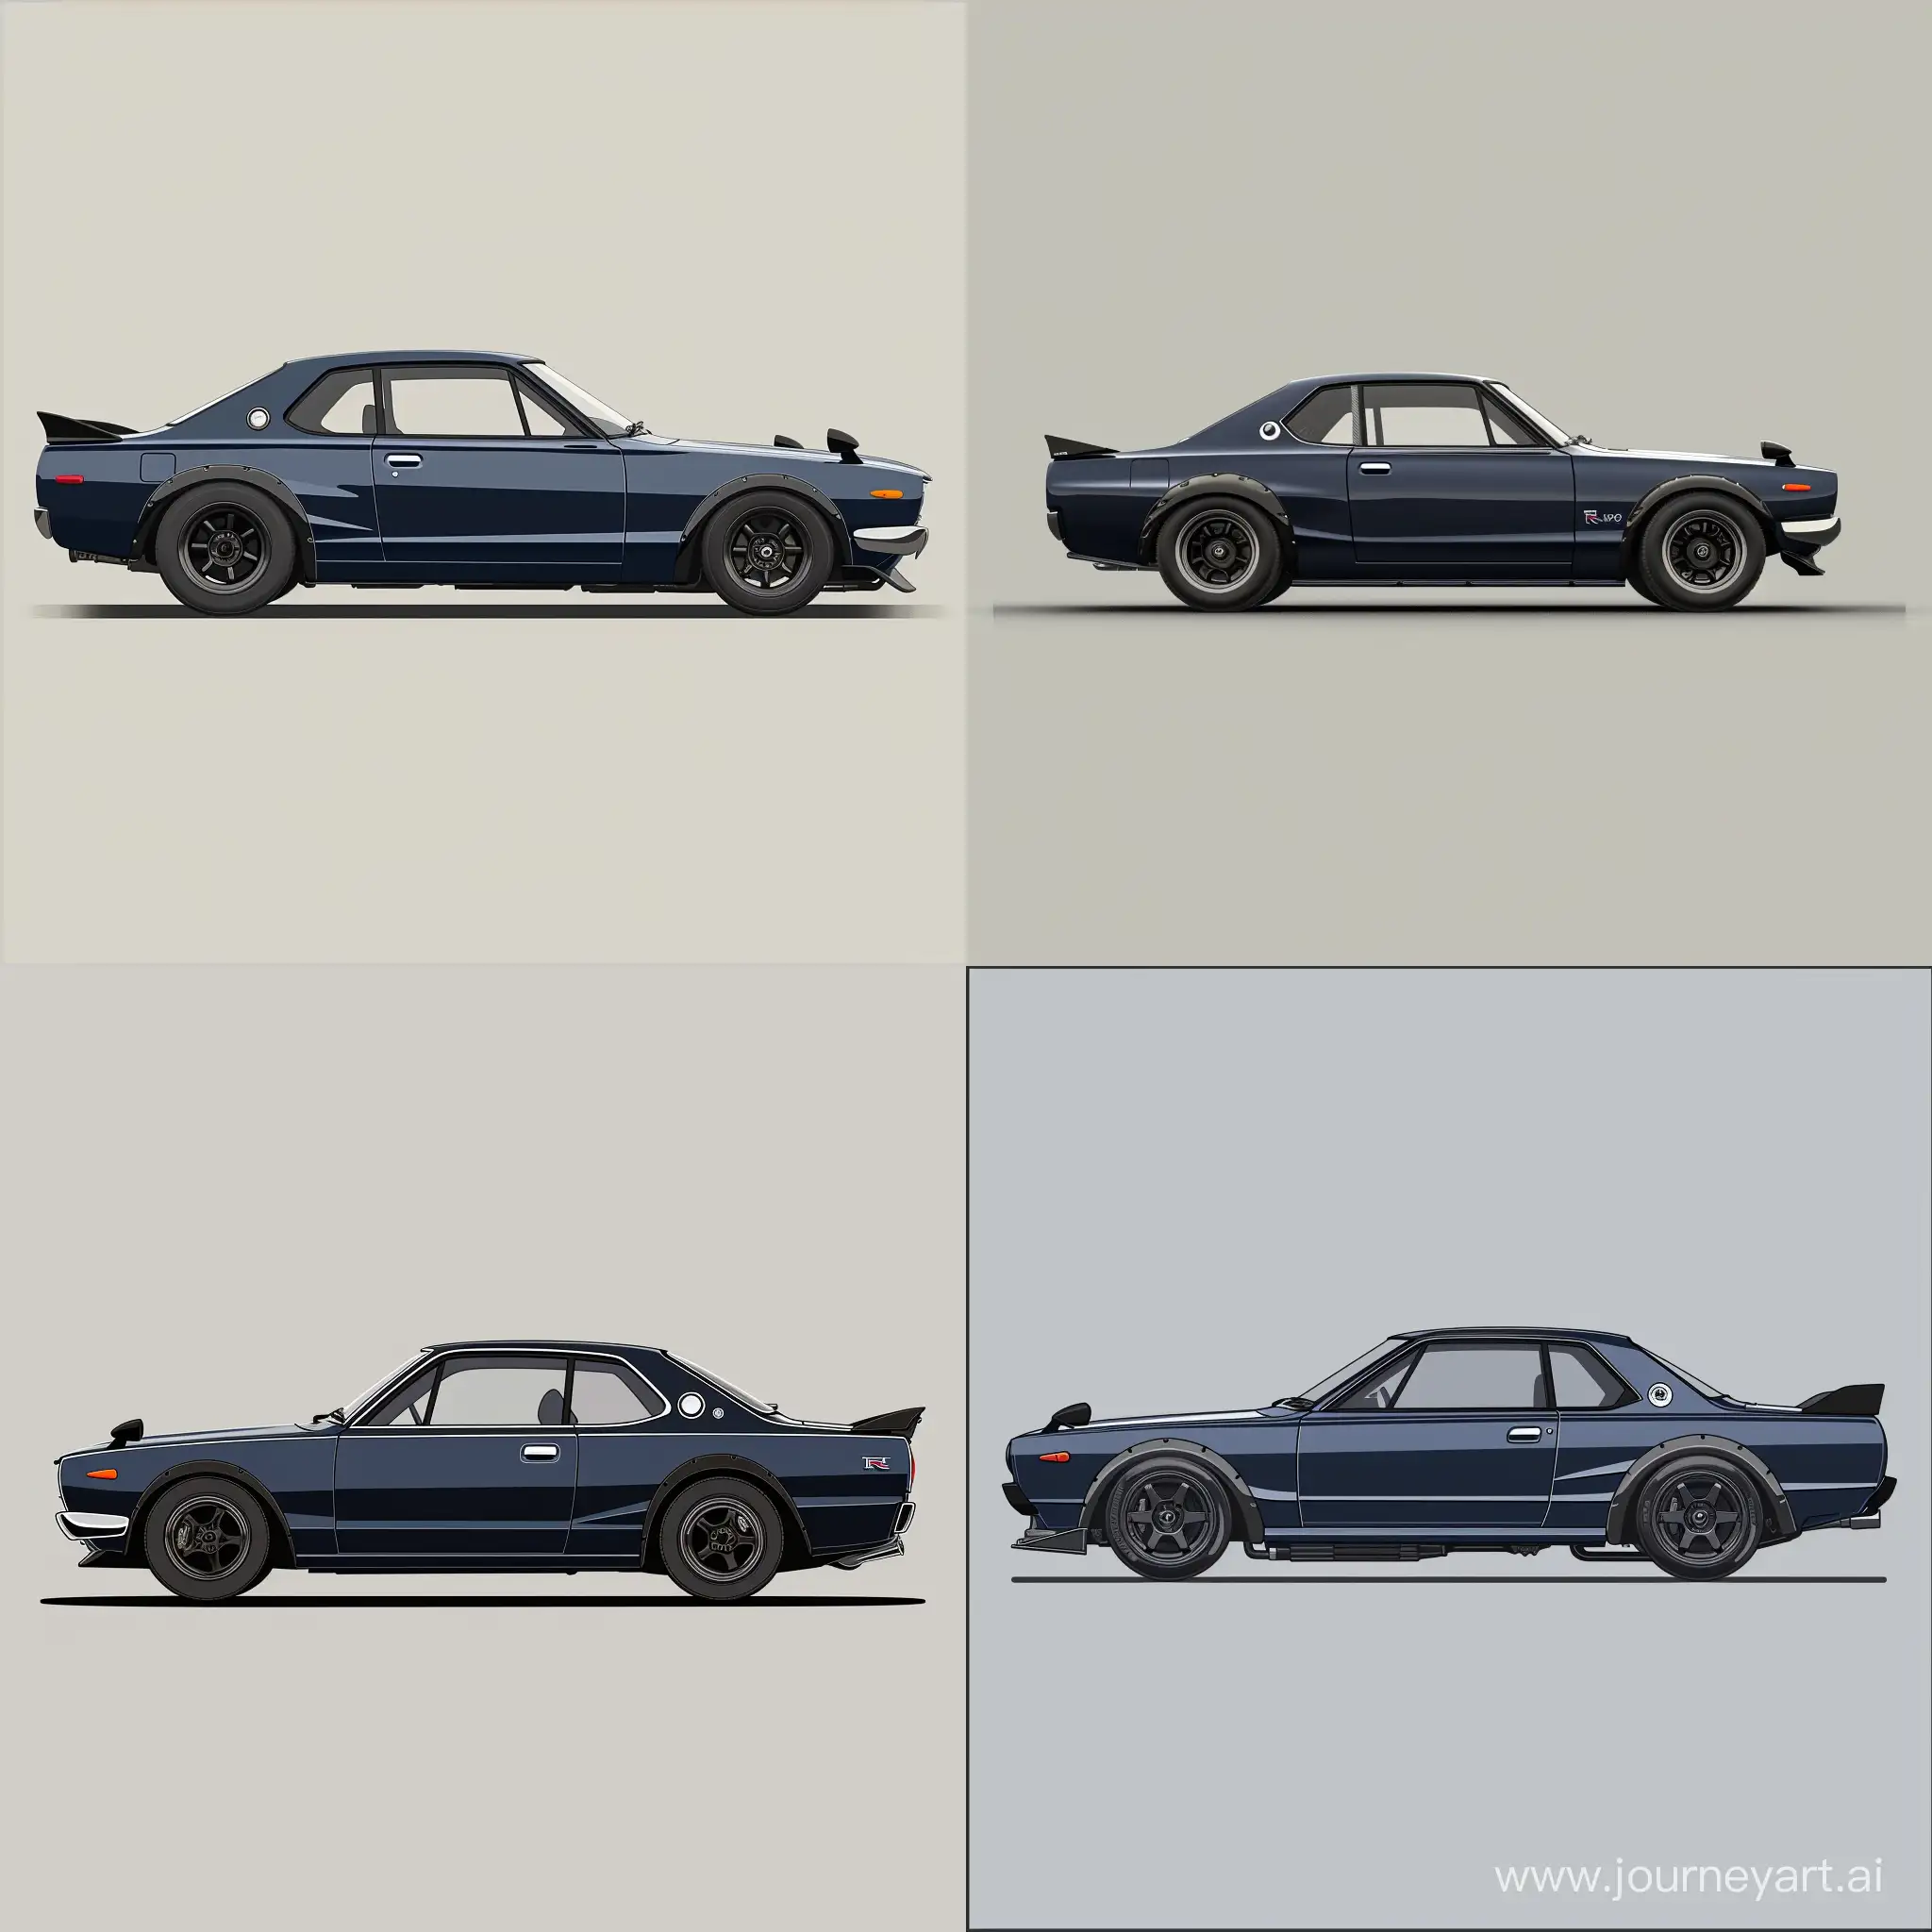 Sleek-Navy-Blue-Nissan-Skyline-R29-Minimalist-Illustration-on-Gray-Background